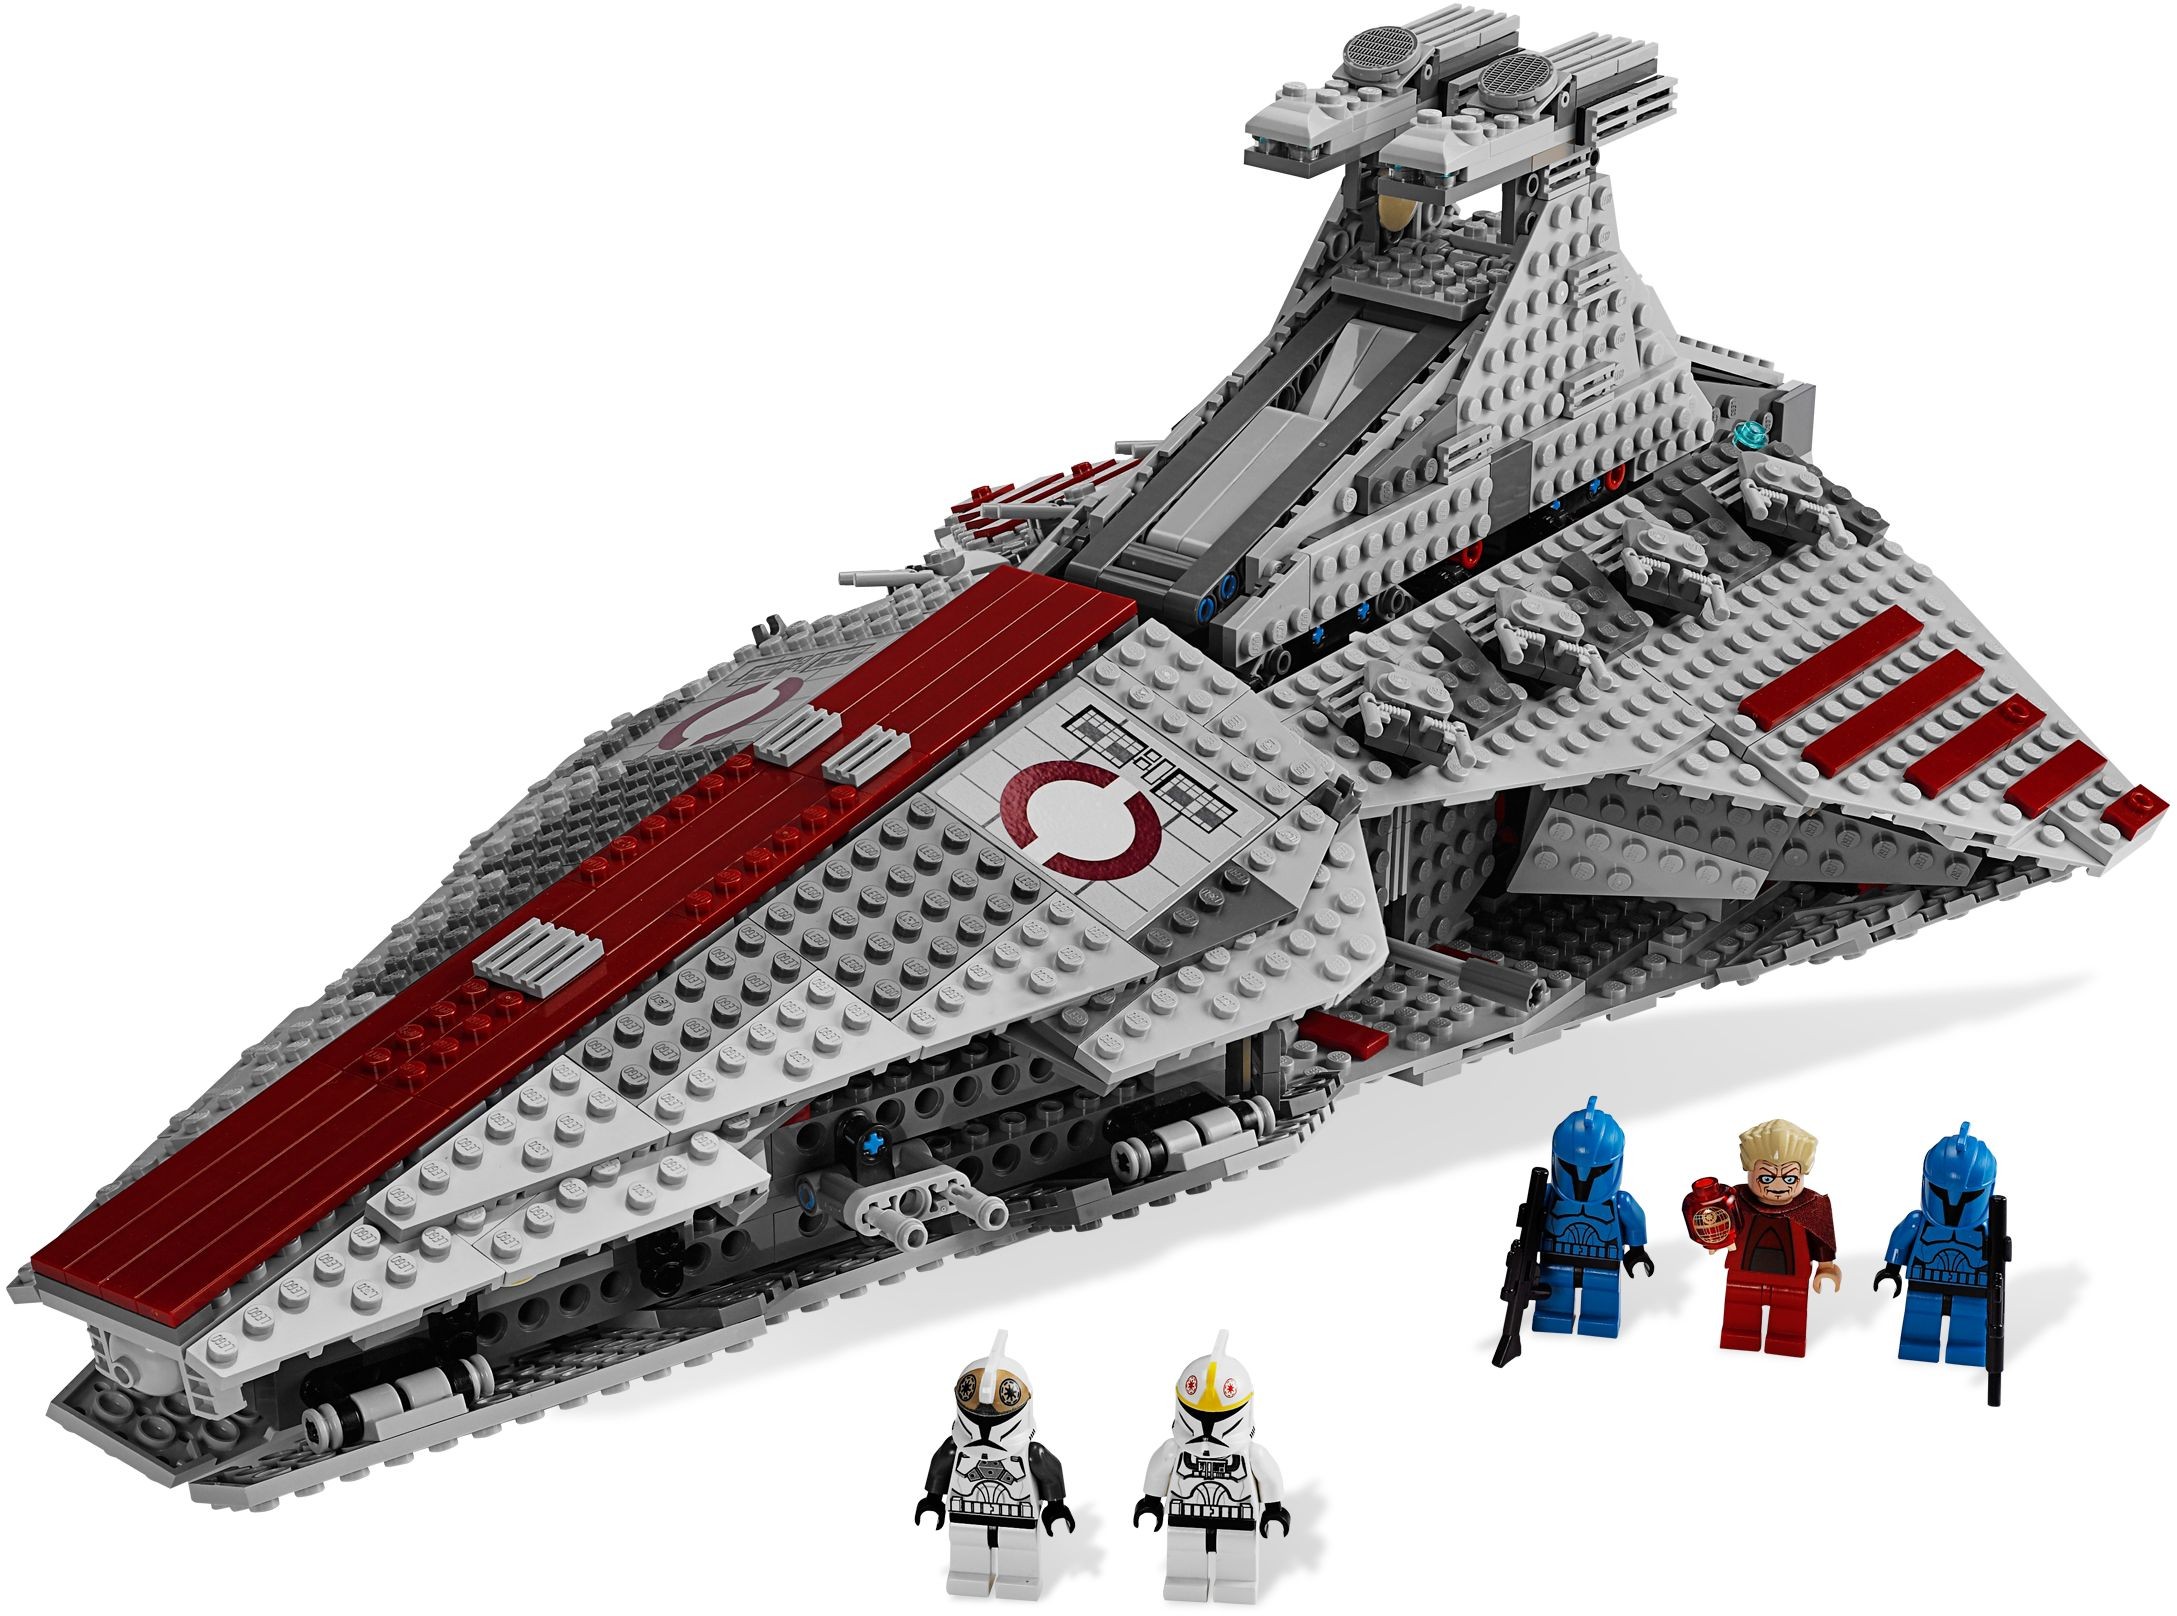 8039 VenatorClass Republic Attack Cruiser Lego Star Wars & Beyond